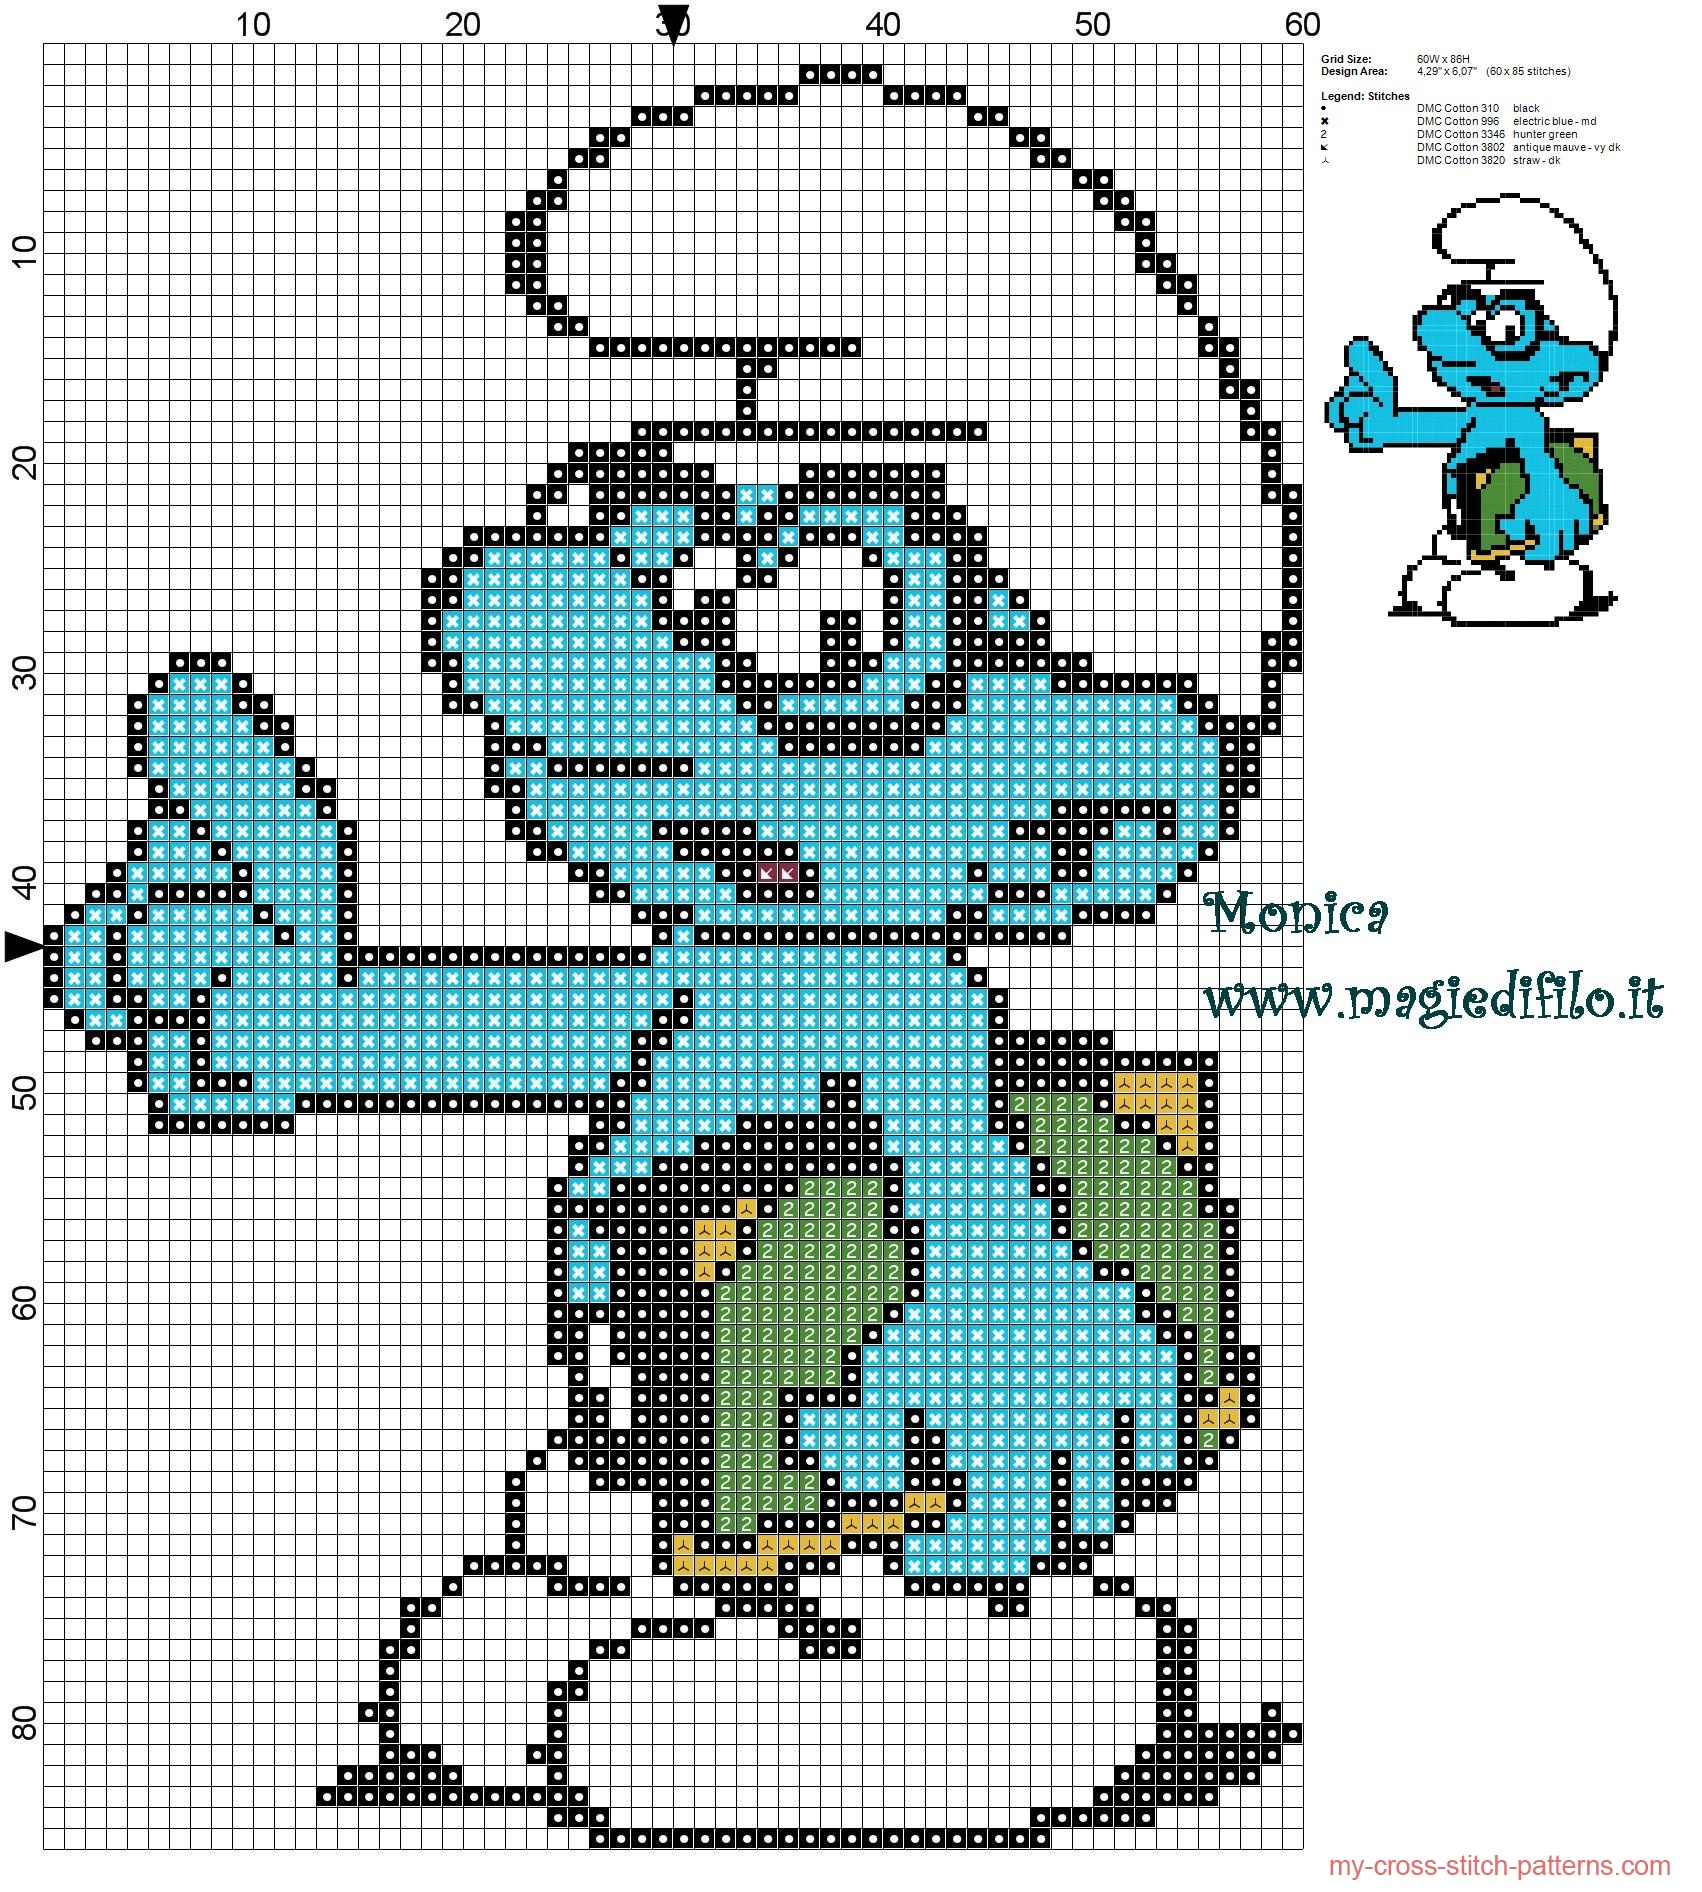 brainy_smurf_cross_stitch_pattern_